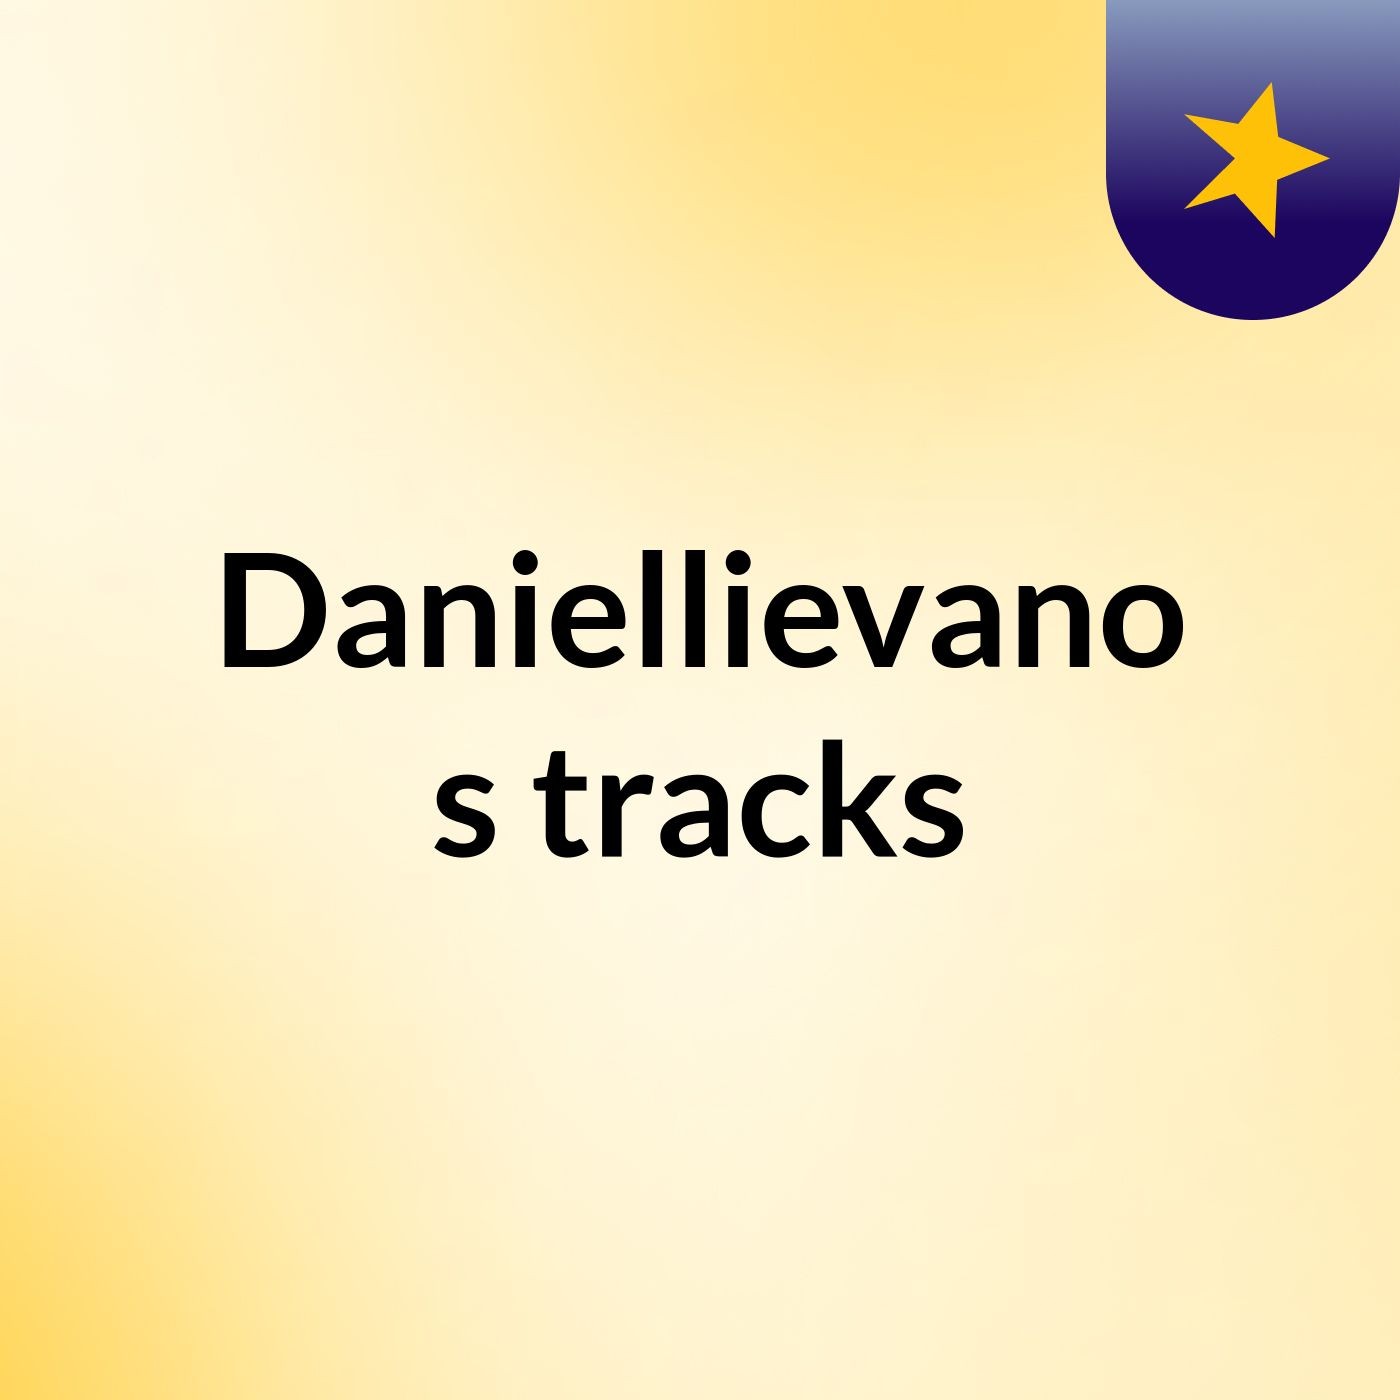 Daniellievano's tracks